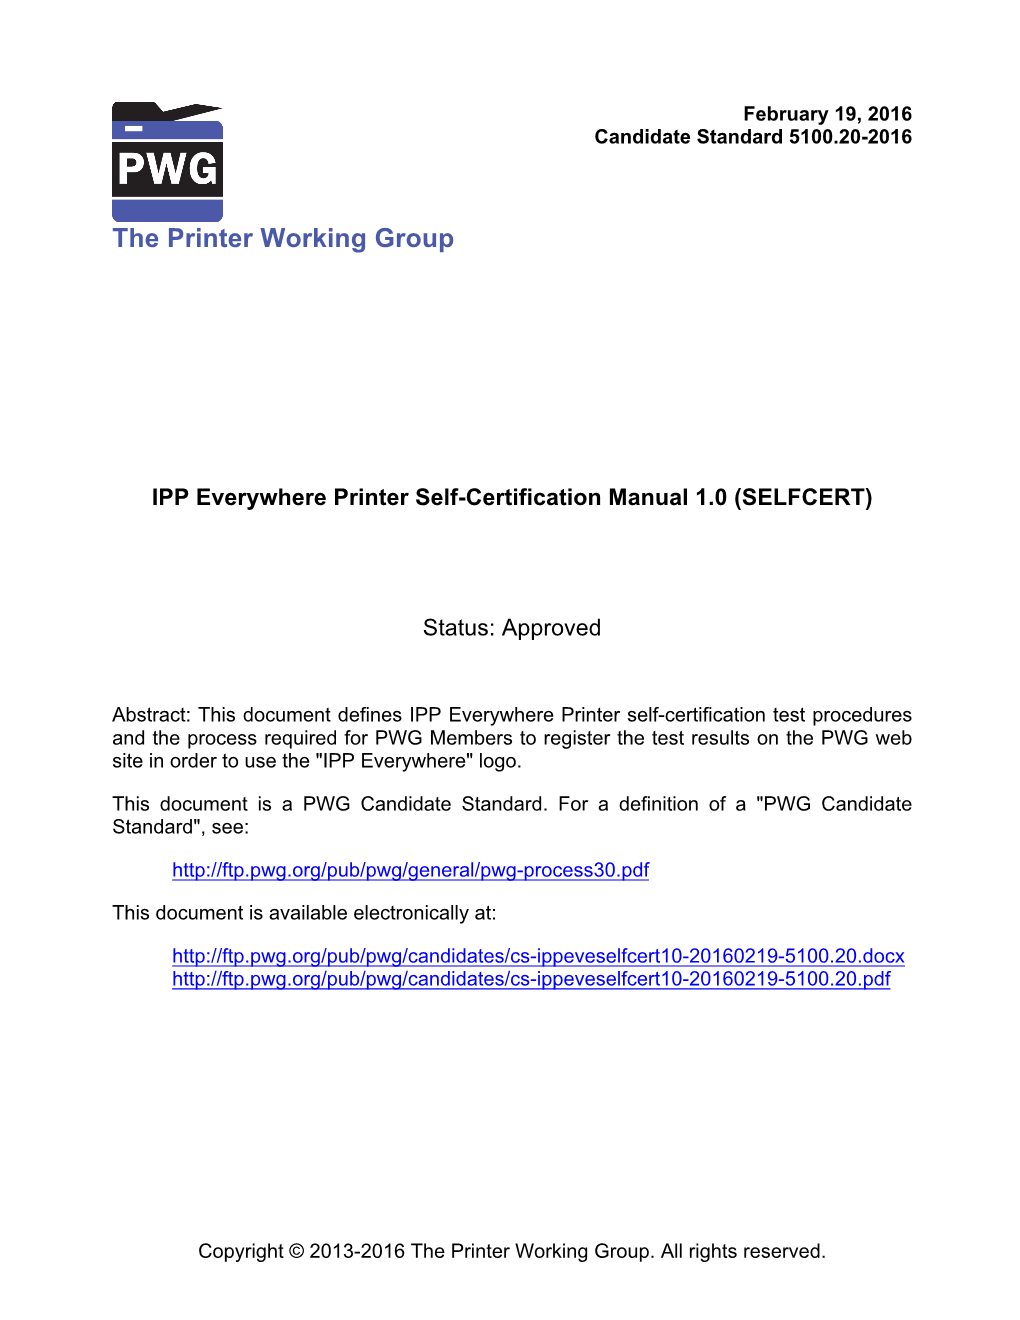 IPP Everywhere Printer Self-Certification Manual 1.0 (SELFCERT)